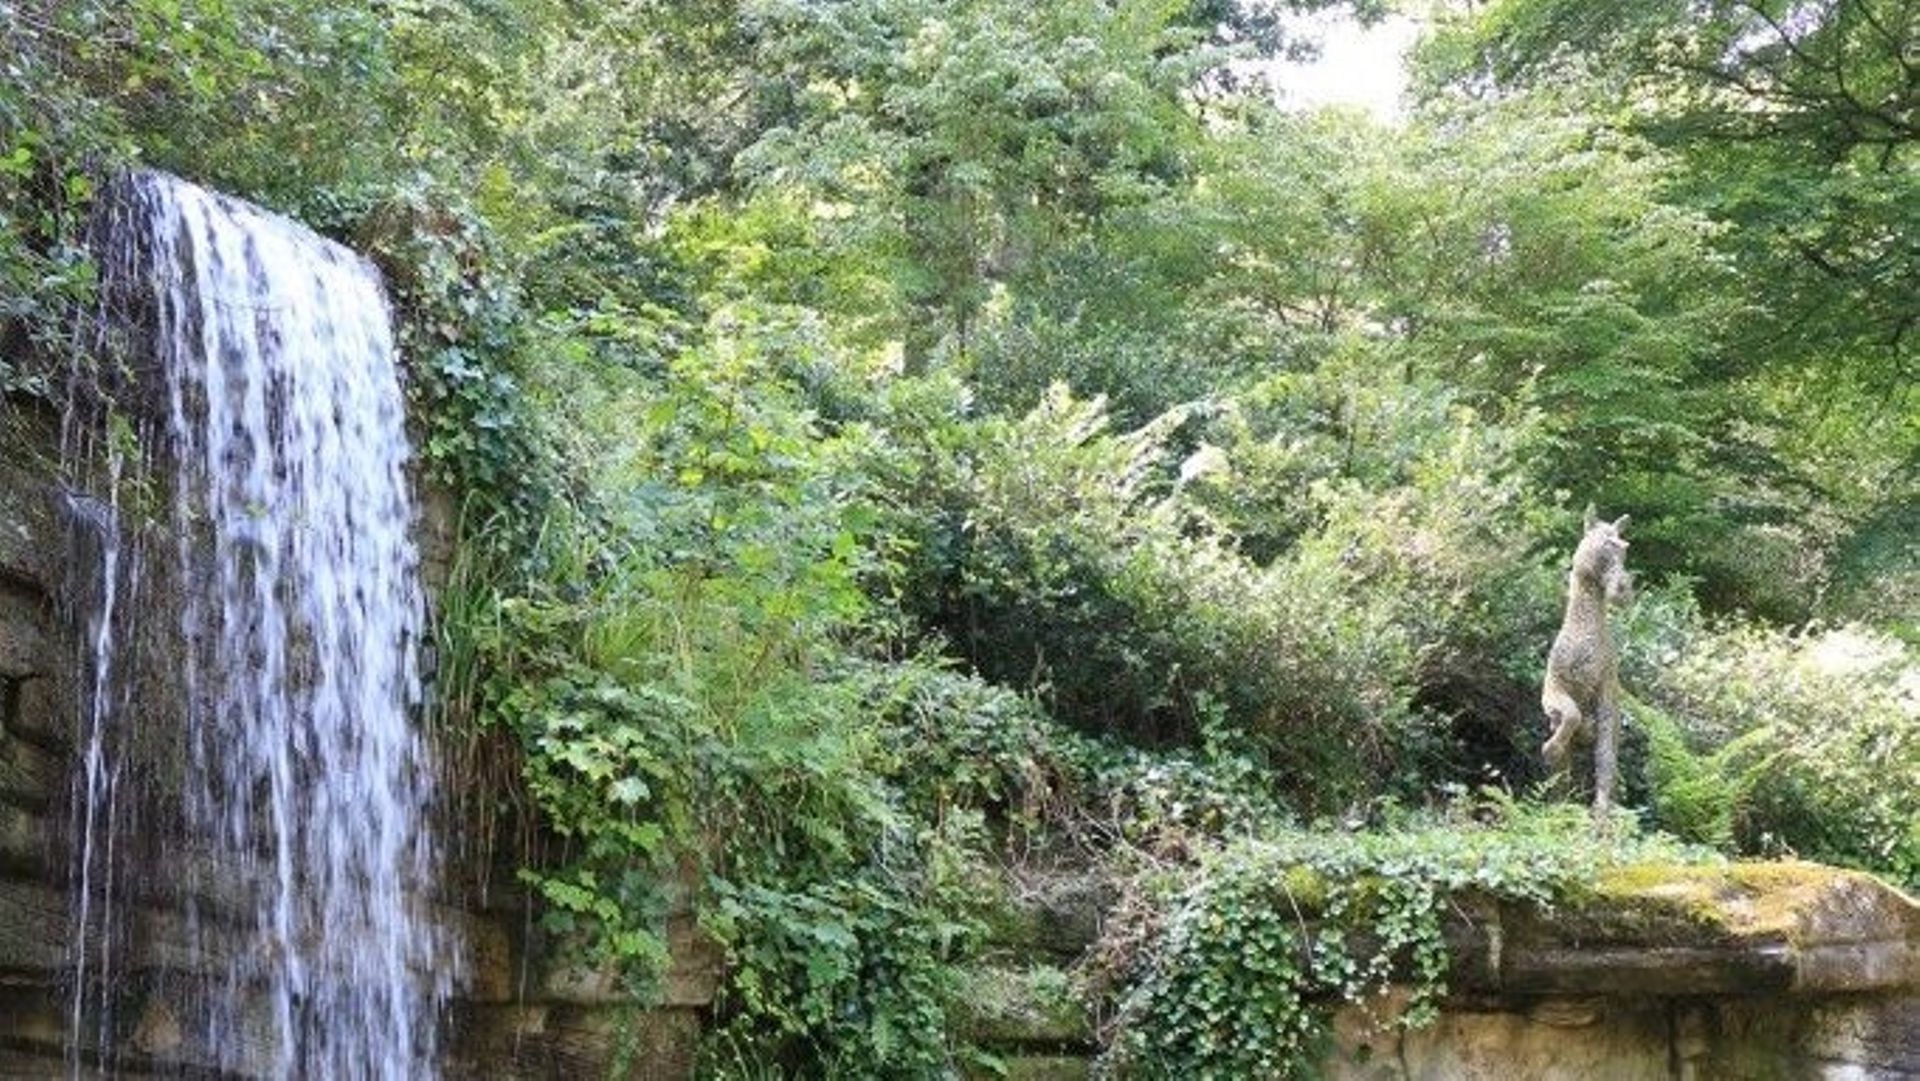 Le jardin de la Licorne et sa jolie cascade